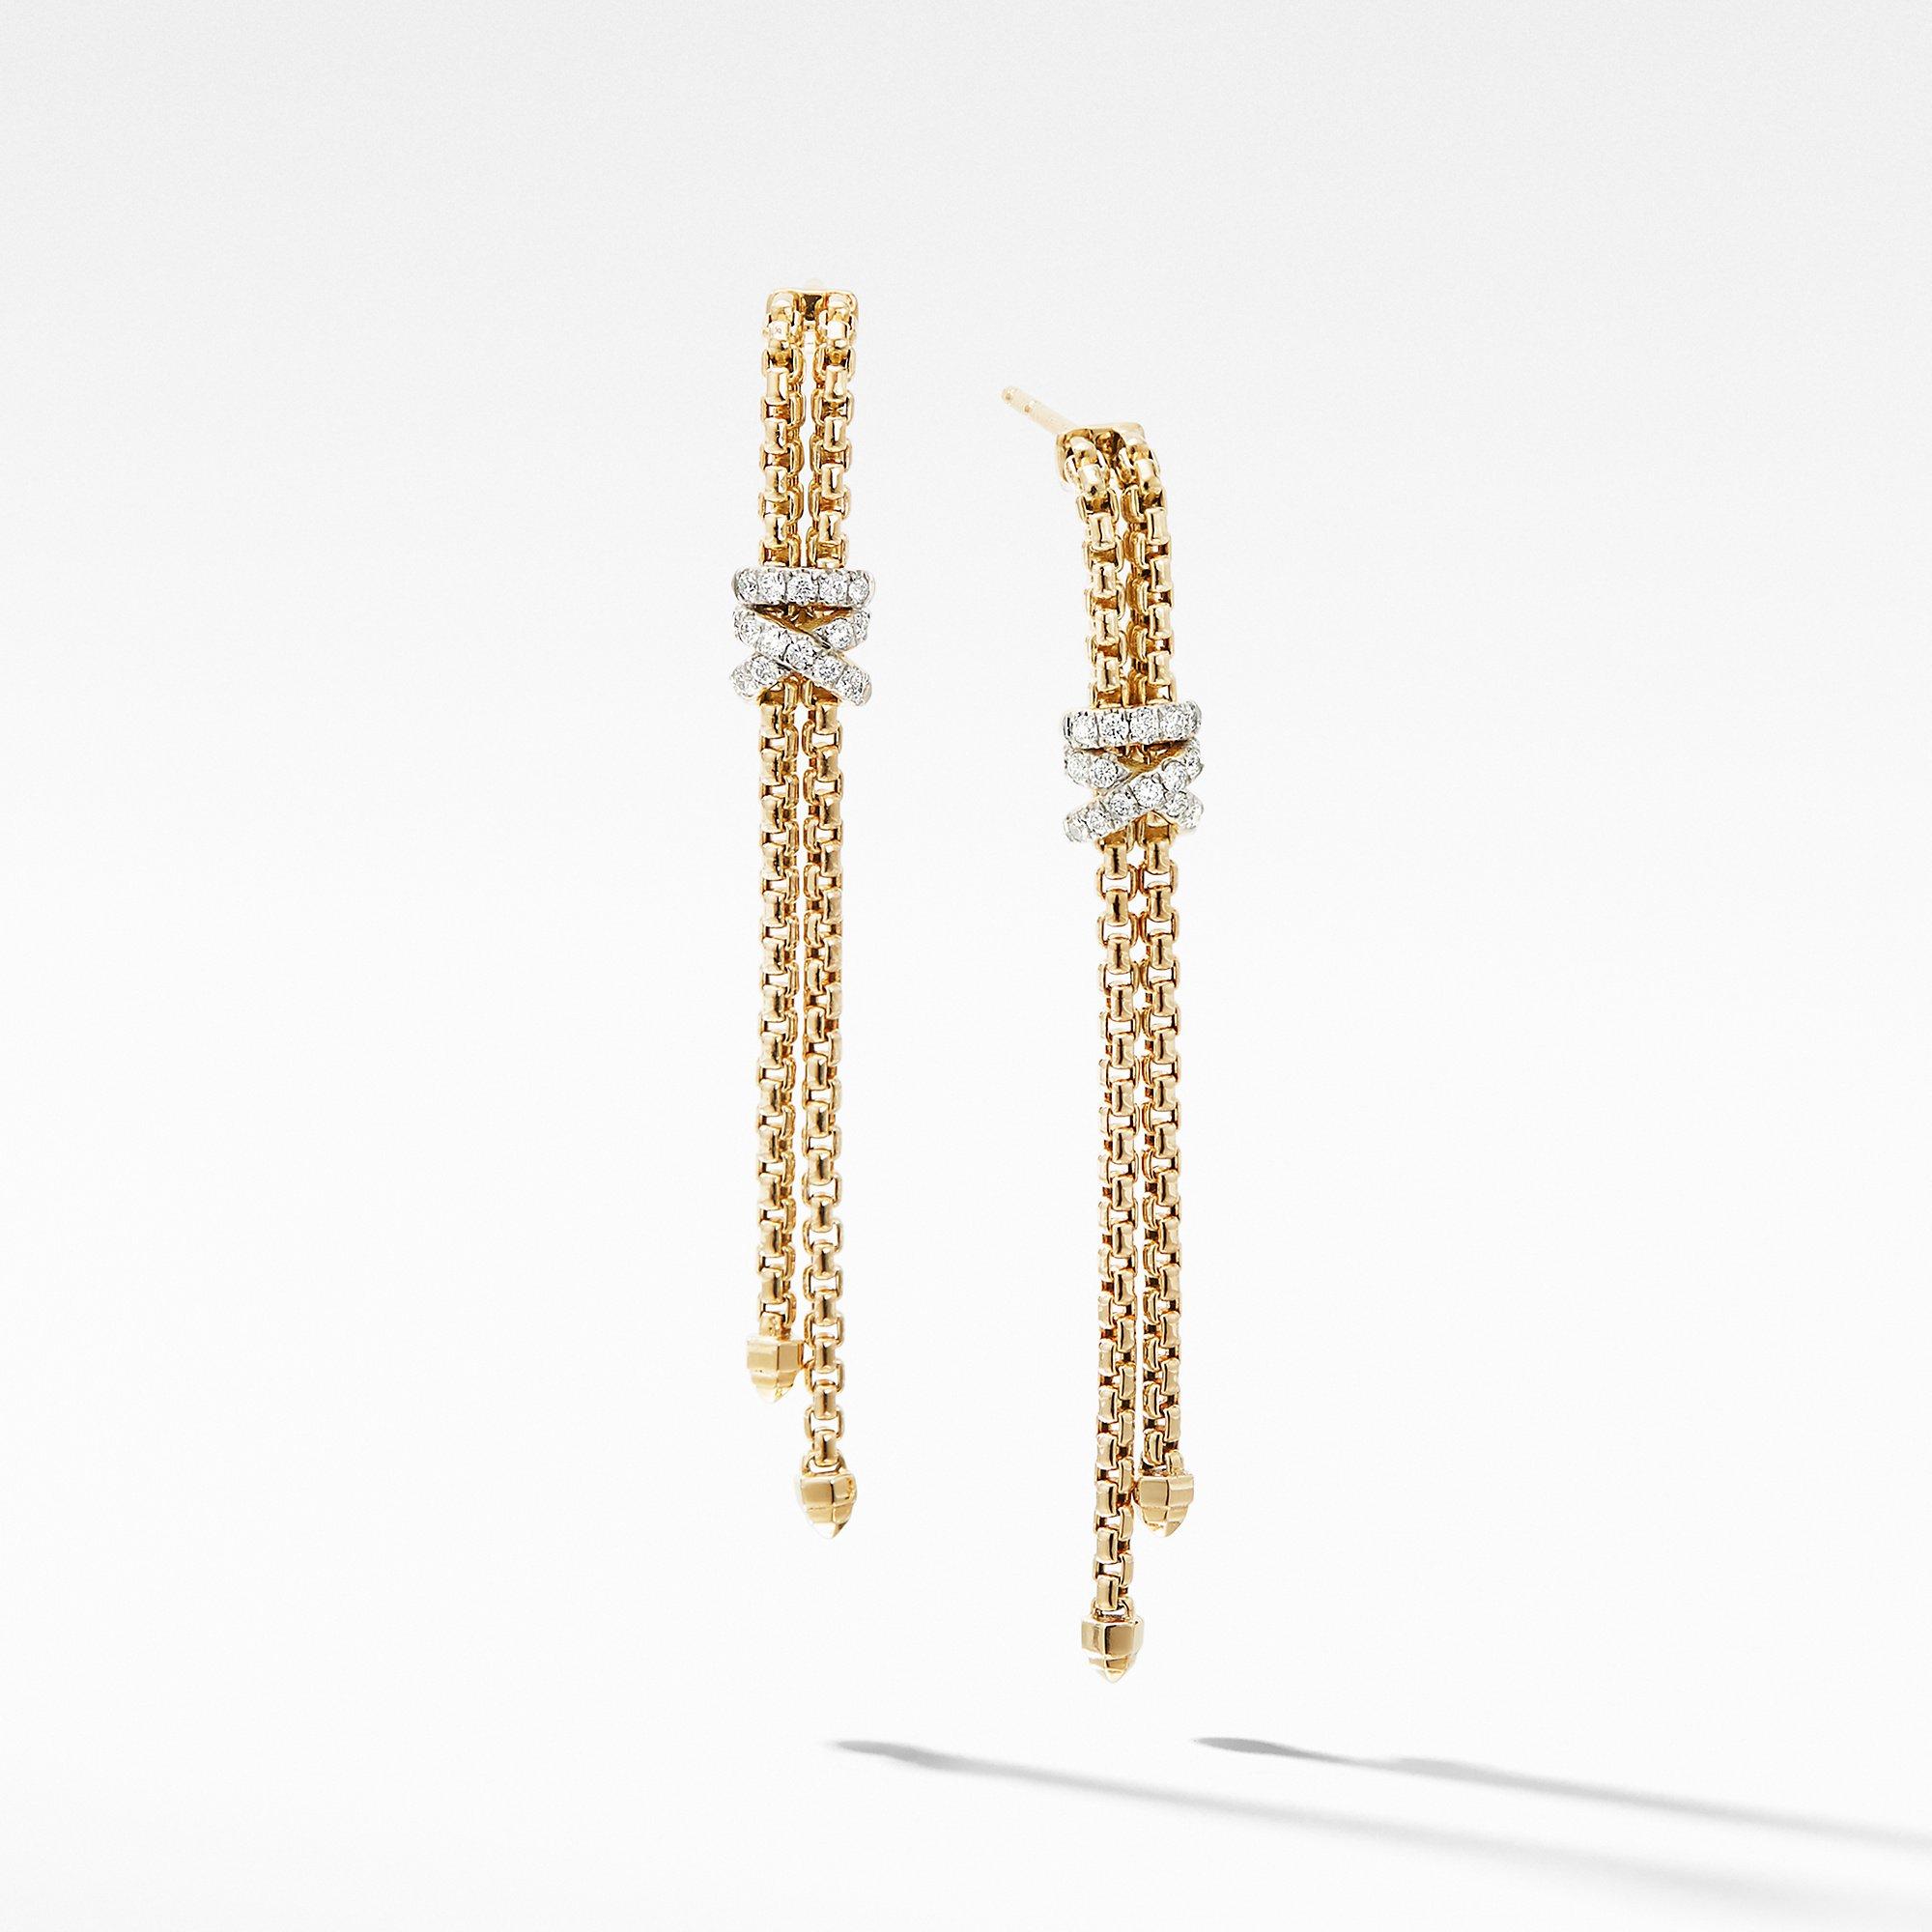 David Yurman Helena Box Chain Earrings in 18k Yellow Gold with Diamonds